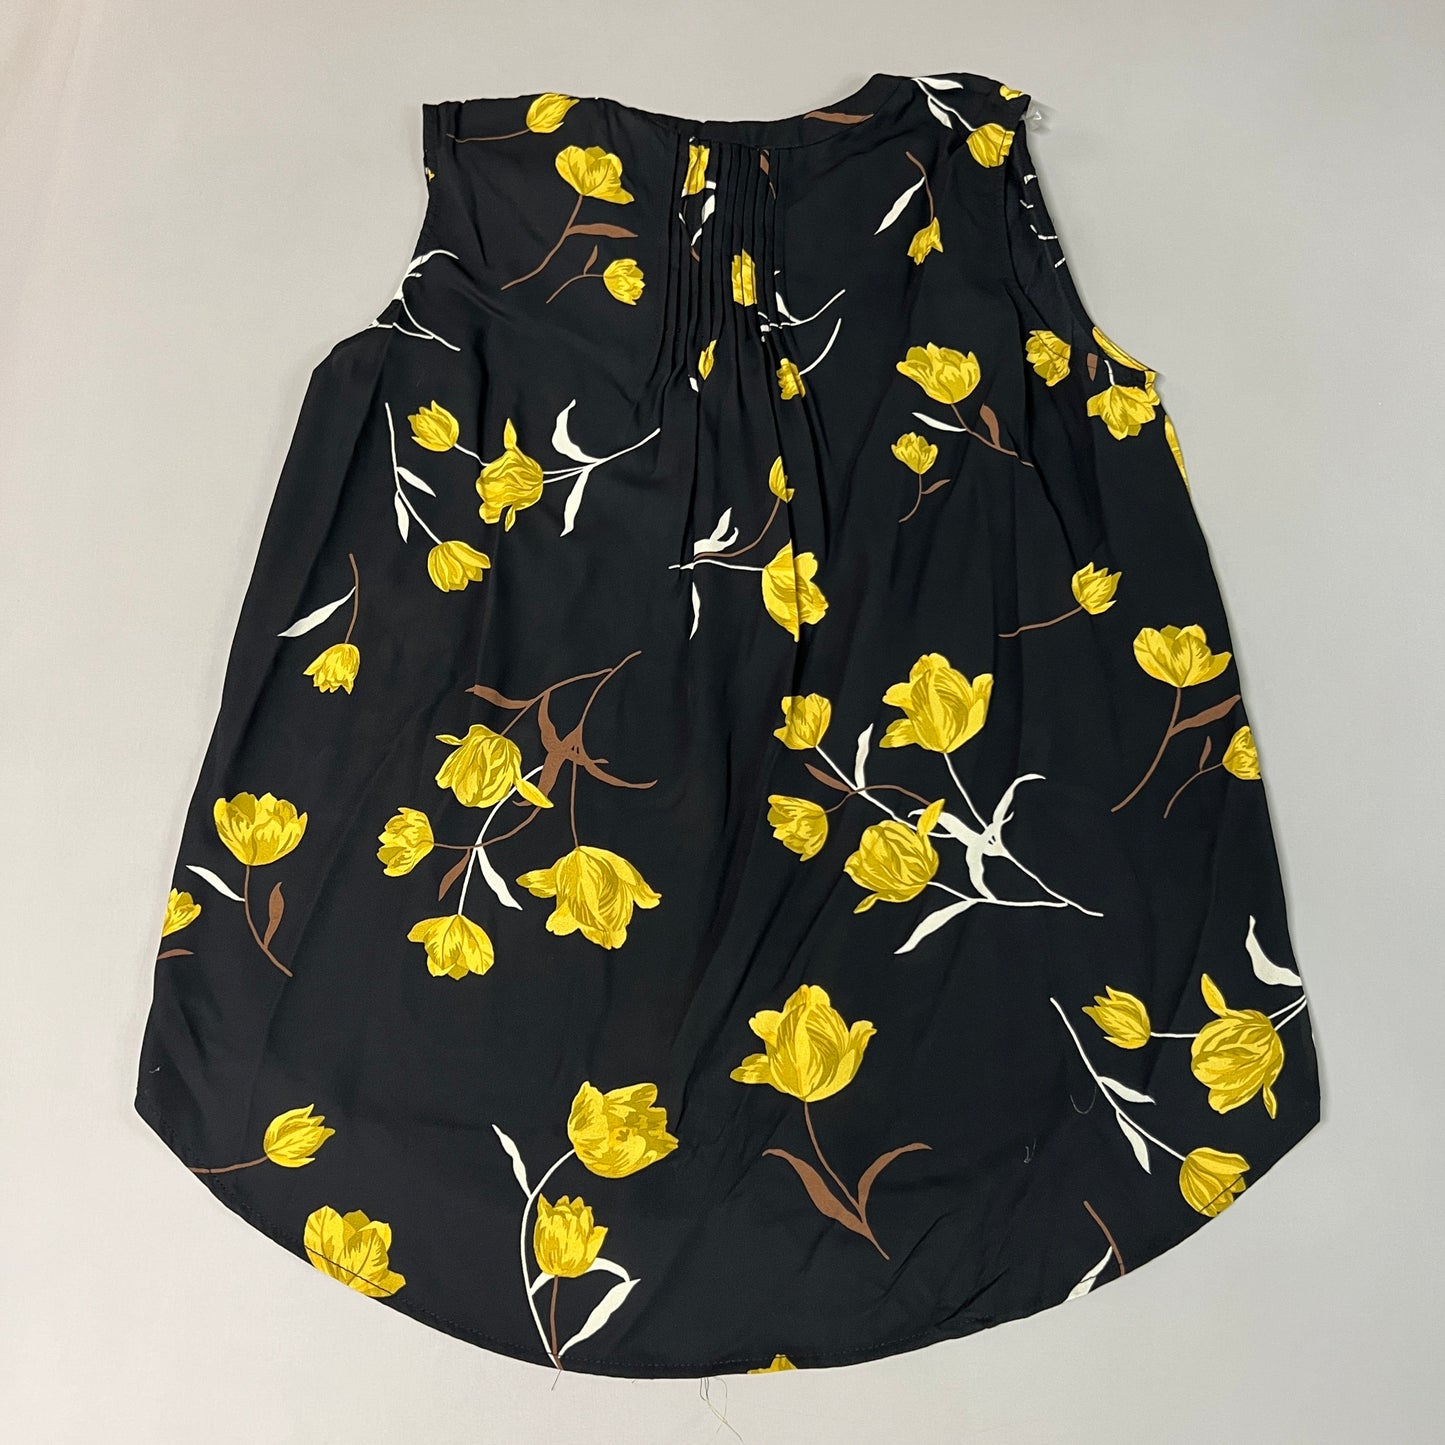 CHELSEA & THEODORE Sleeveless Blouse Women's Size M Black/Yellow Tulip 2165072 (NEW)